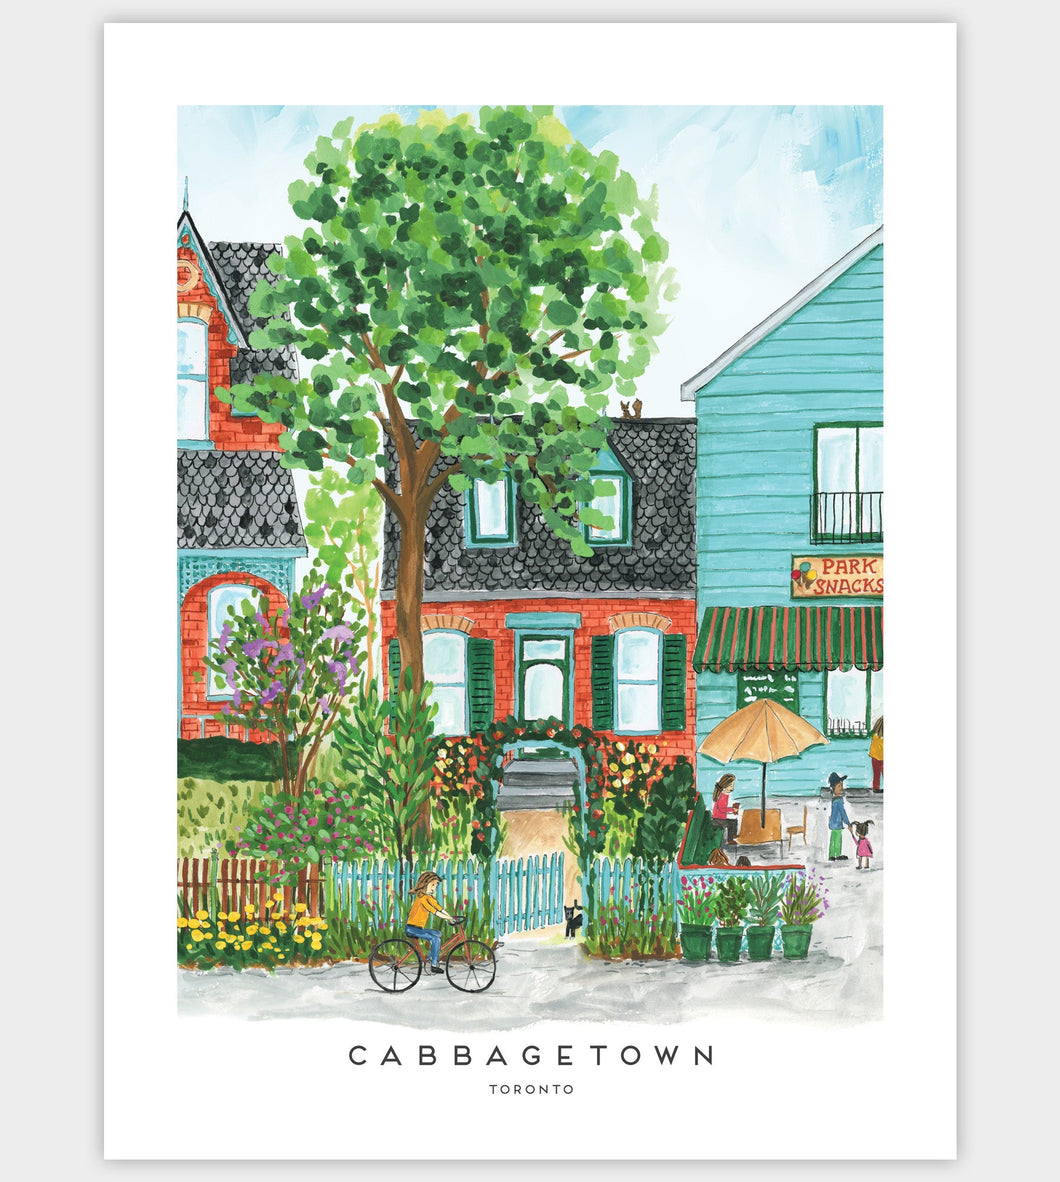 Cabbagetown Park Snacks Art Print (12